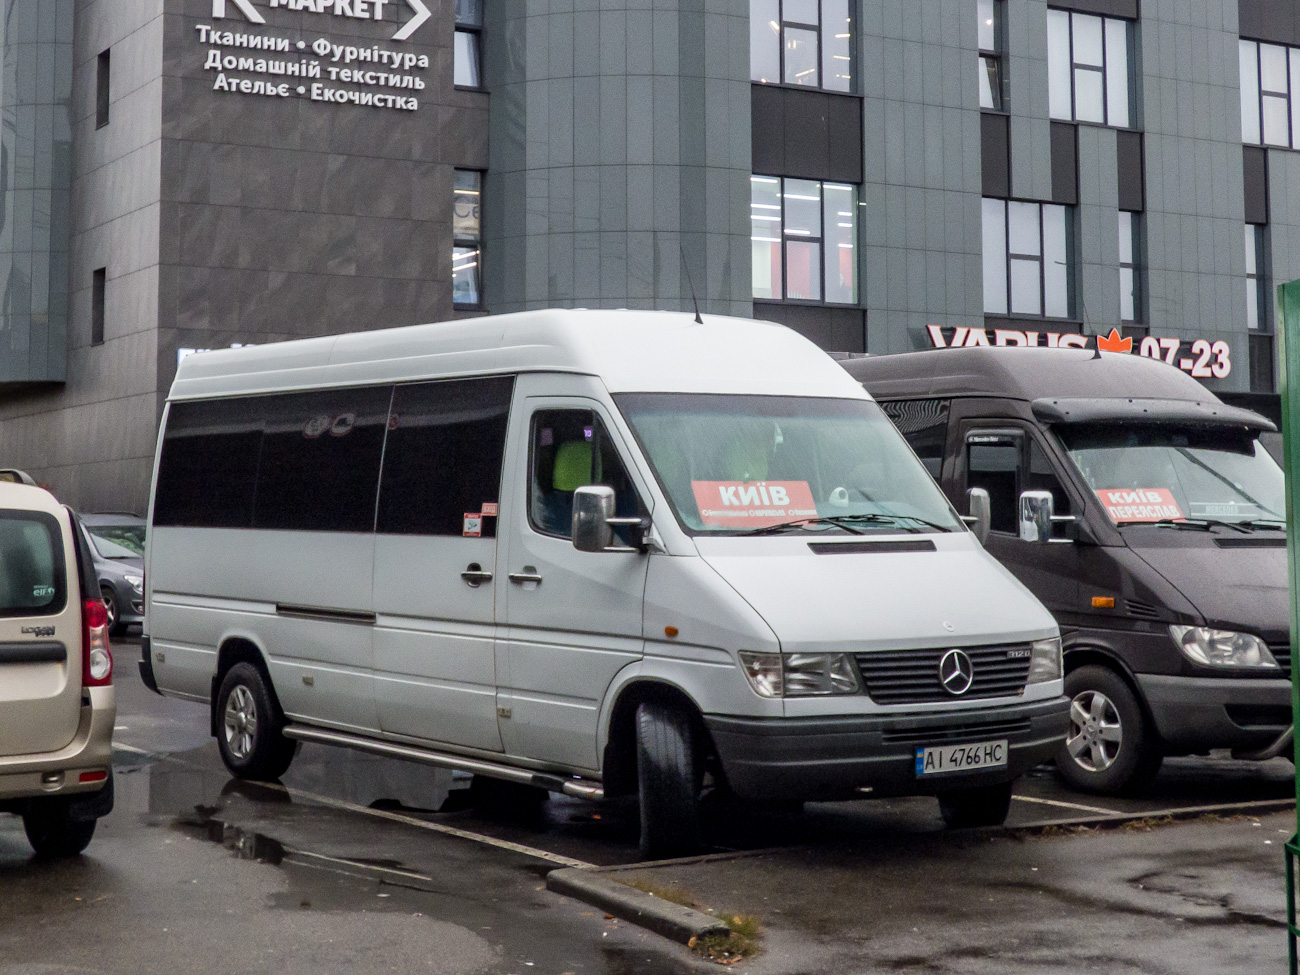 Киев, Mercedes-Benz Sprinter W903 312D № AI 4766 HC